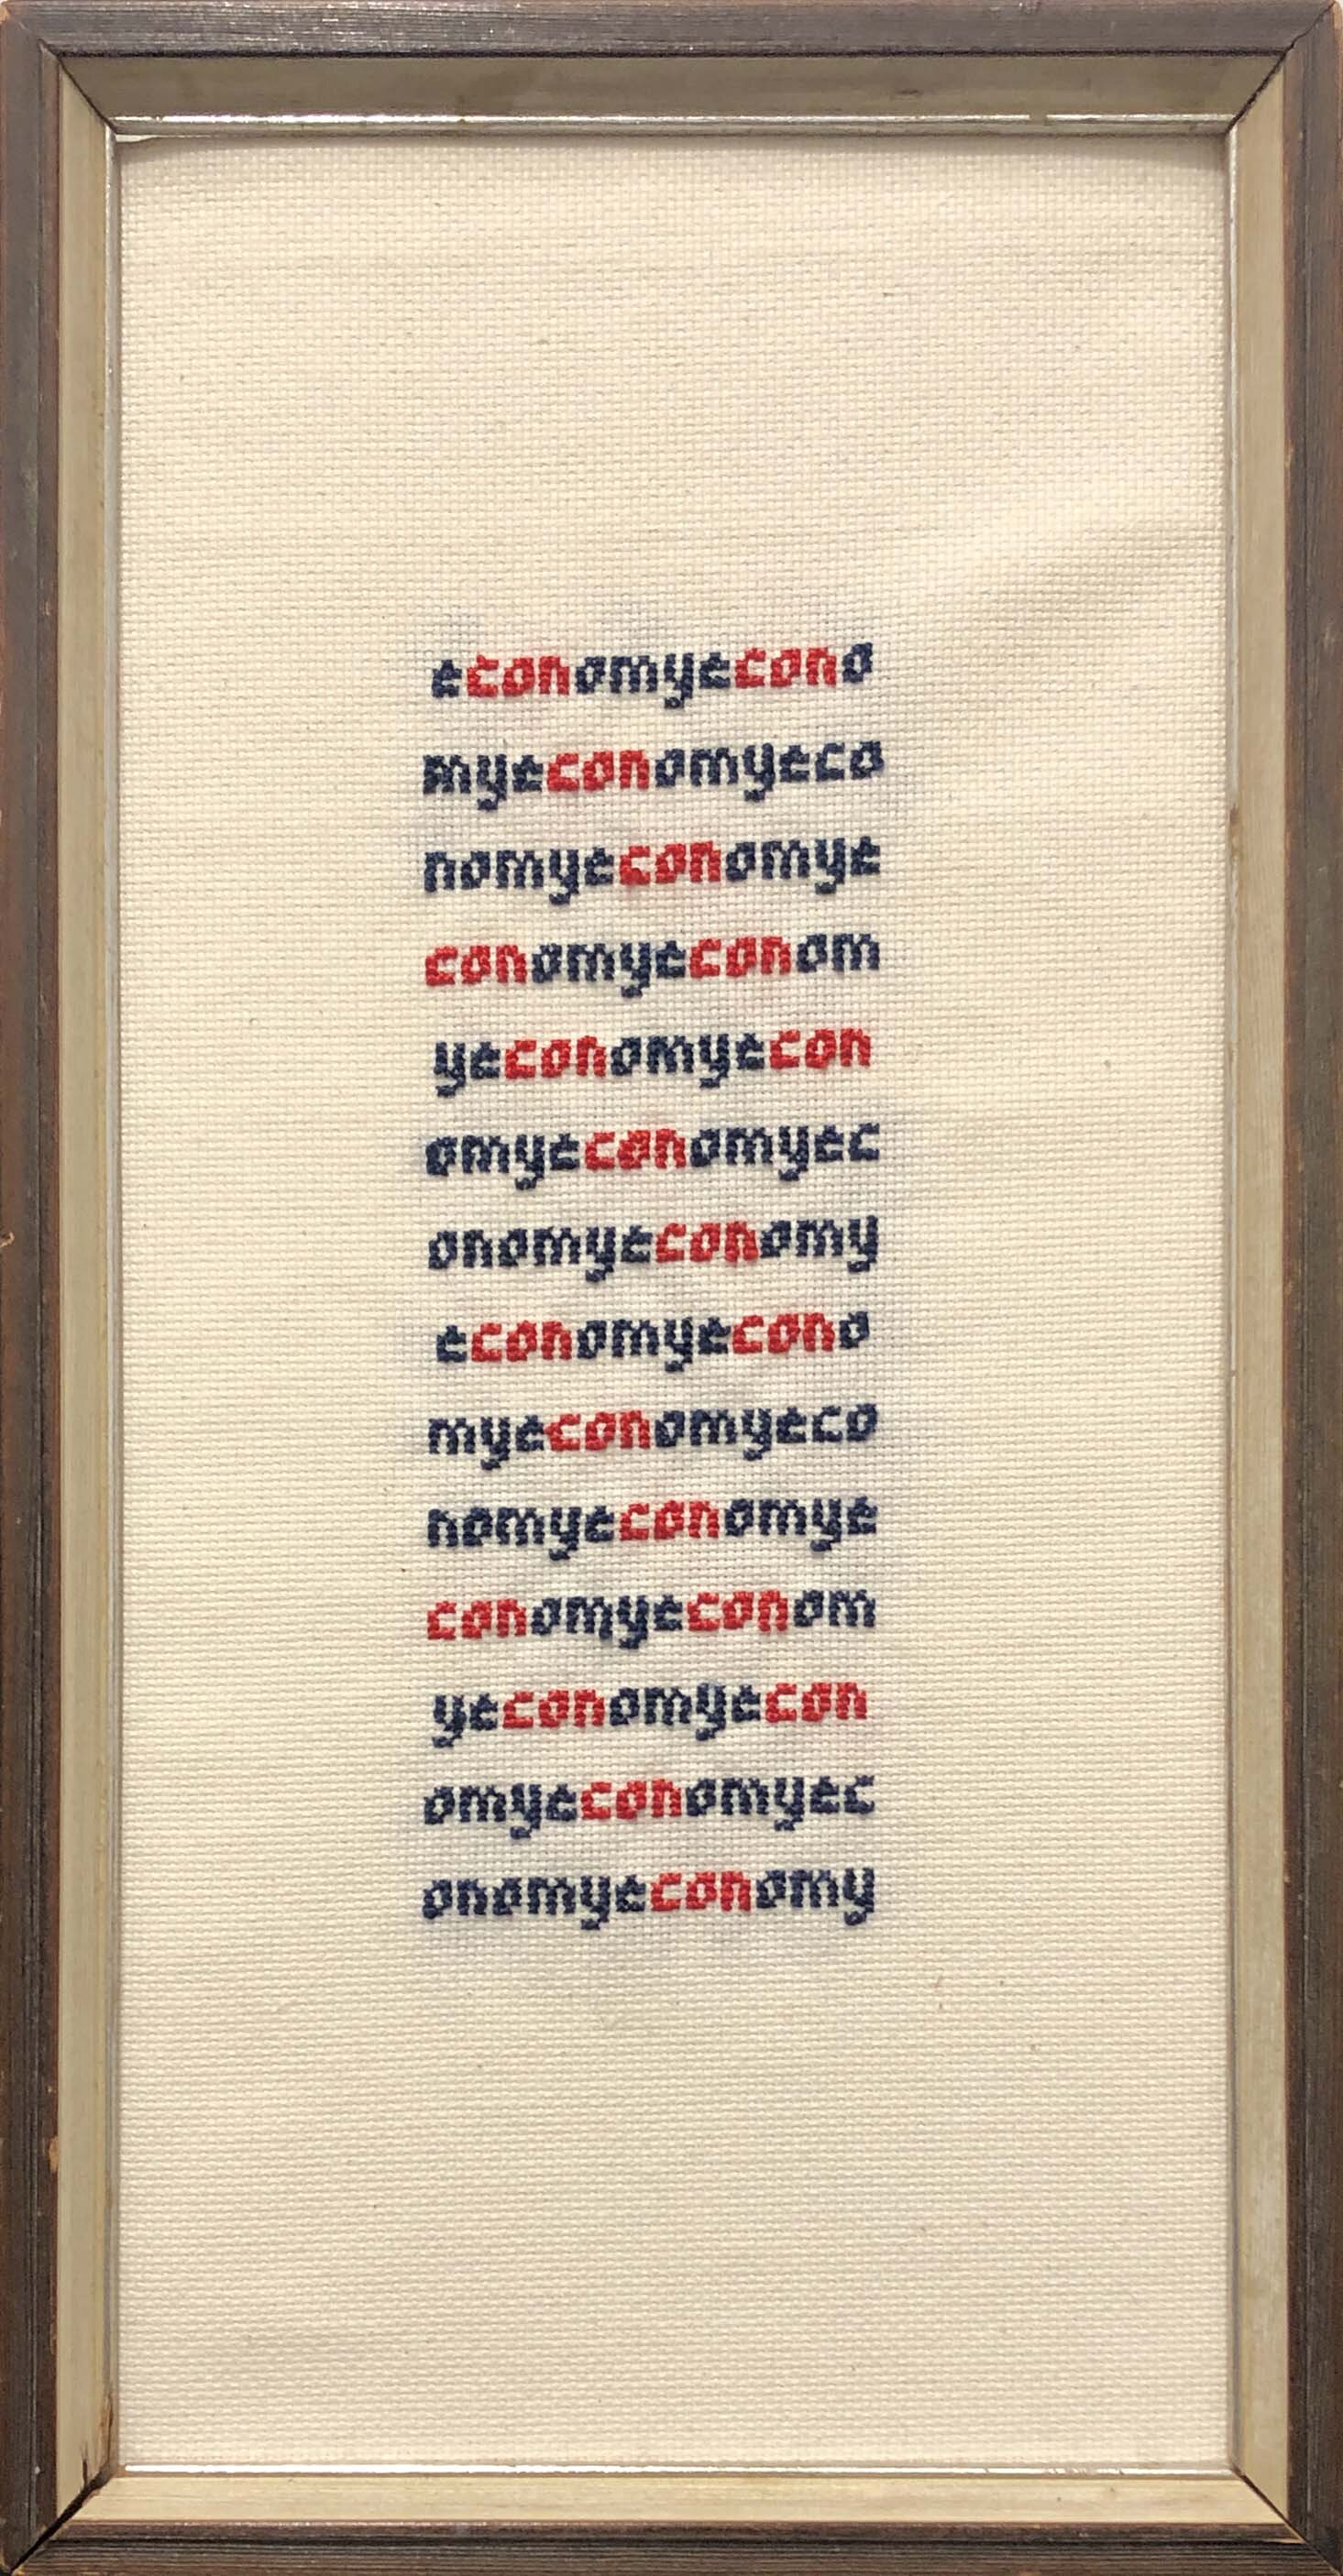   eCONomy , embroidery floss on Aida cloth, vintage frame, 13.5" x 8", 2014 